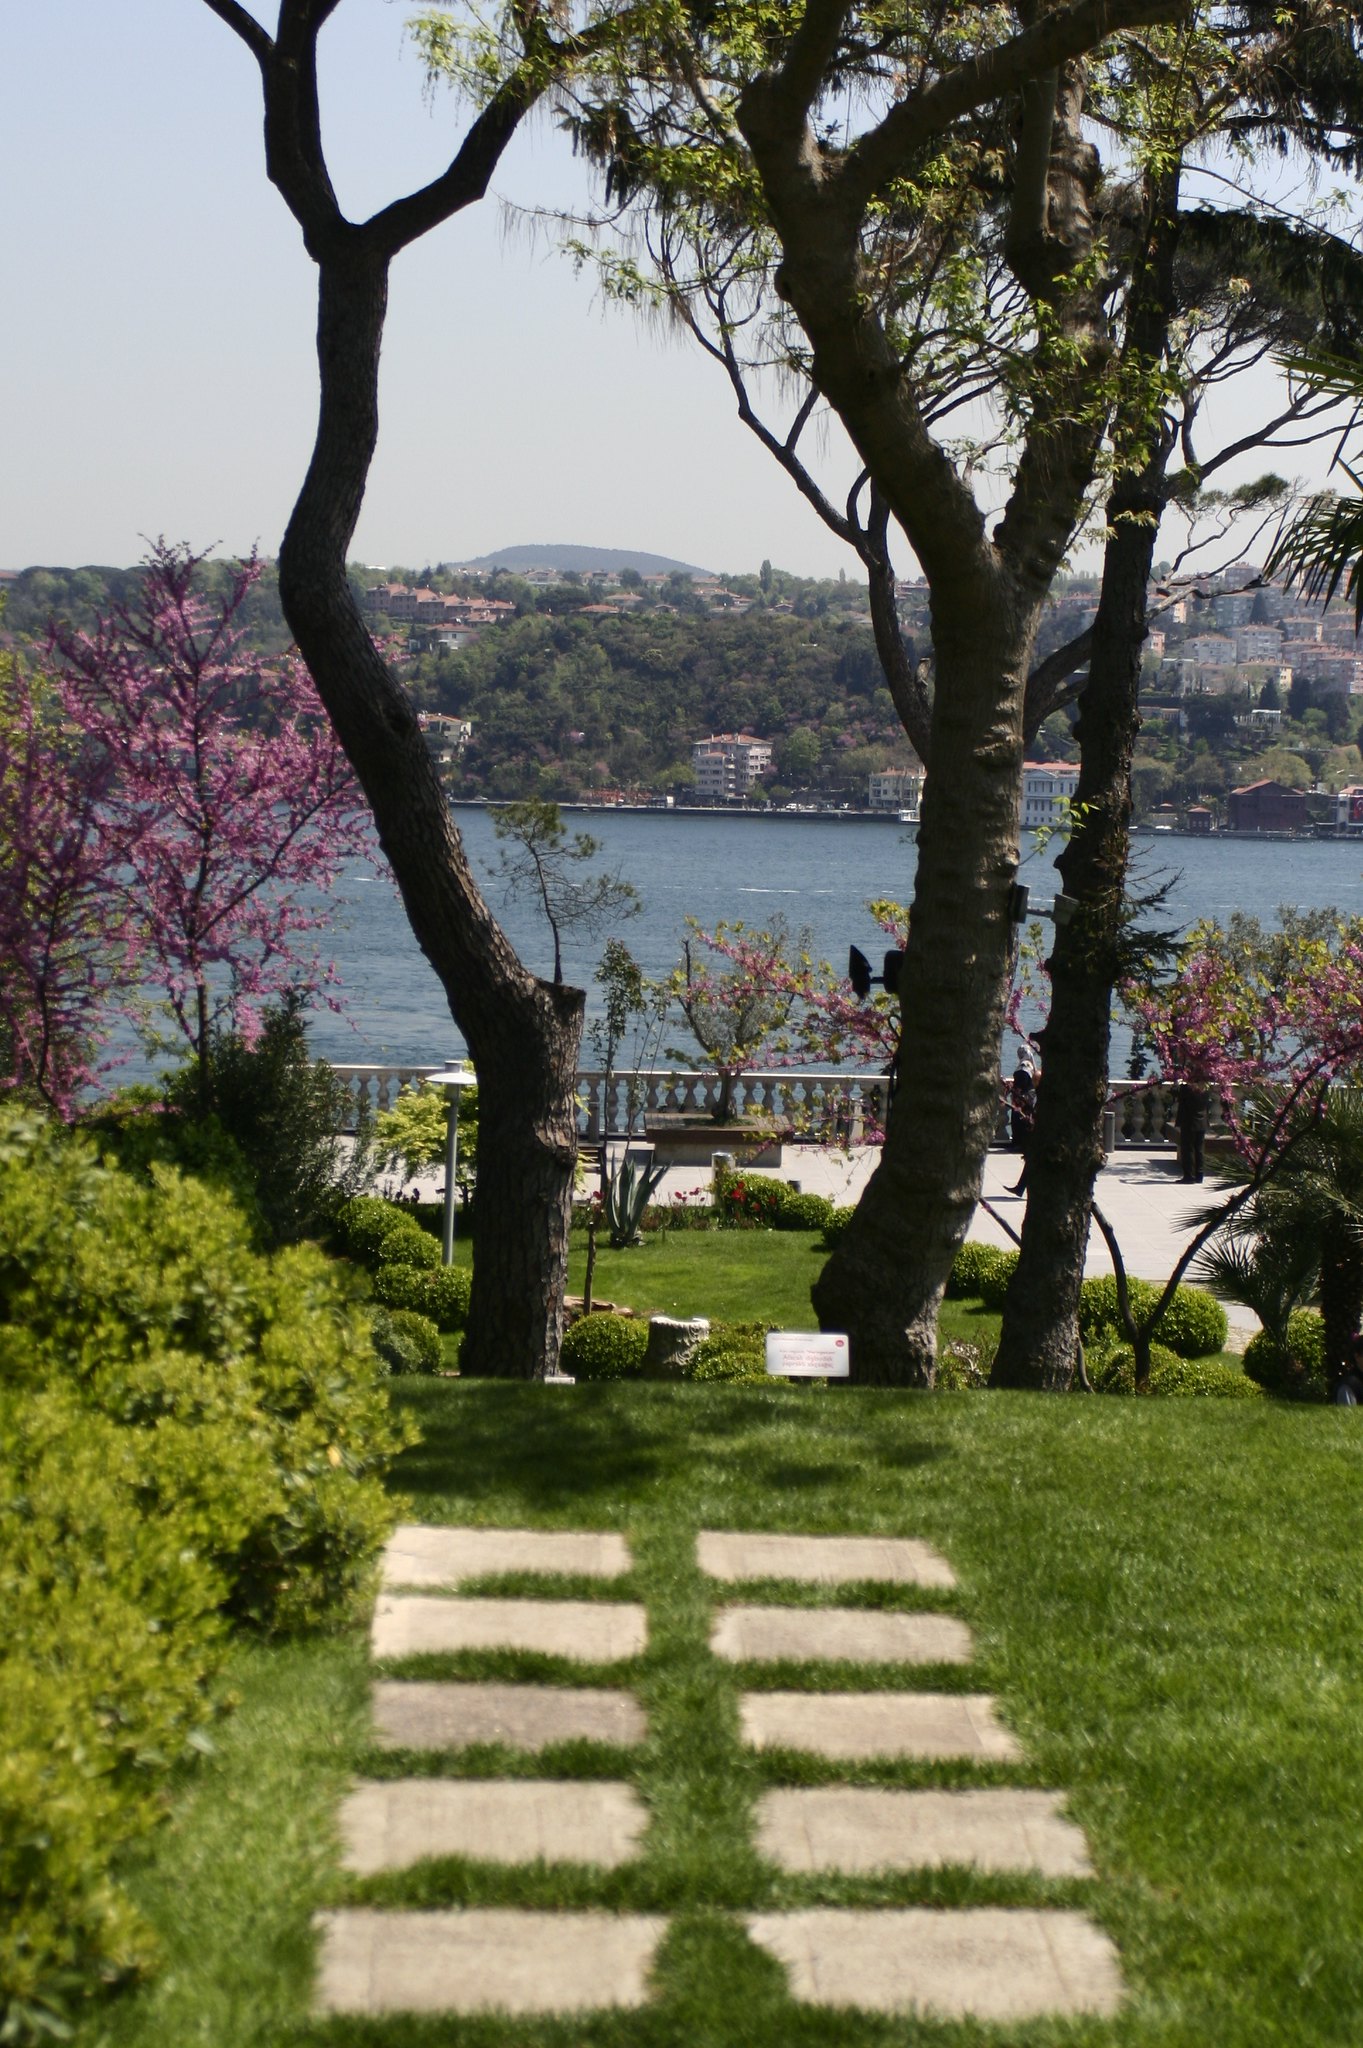 A view of the Bosporus from the Sakıp Sabancı.